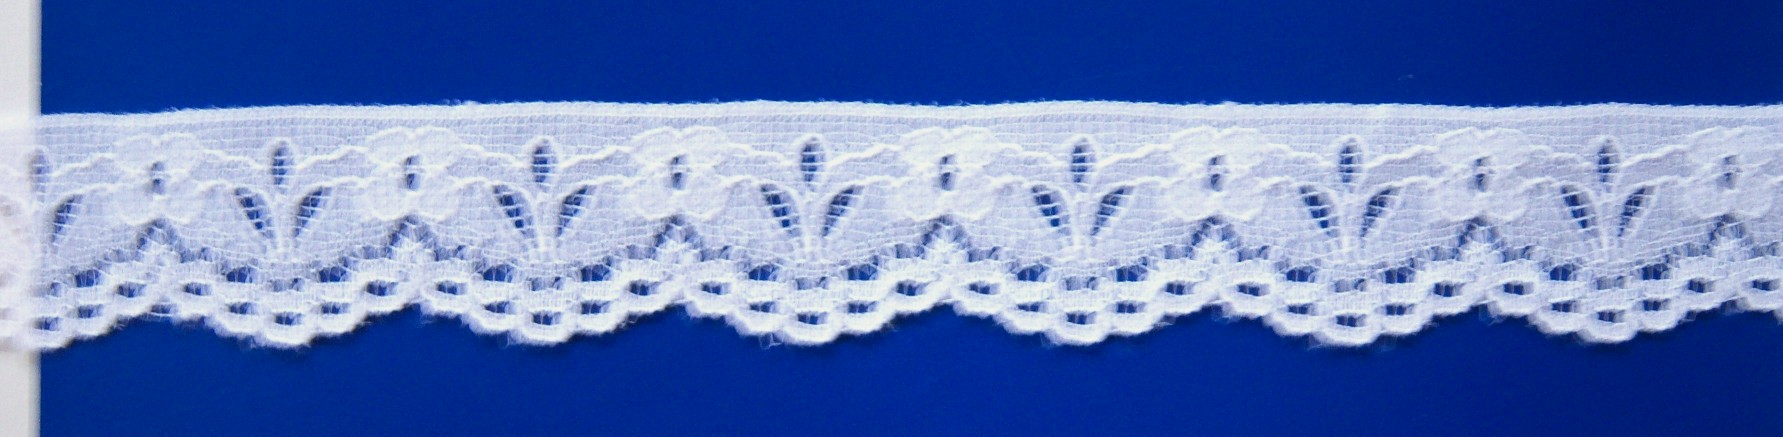 White 1" Nylon Lace